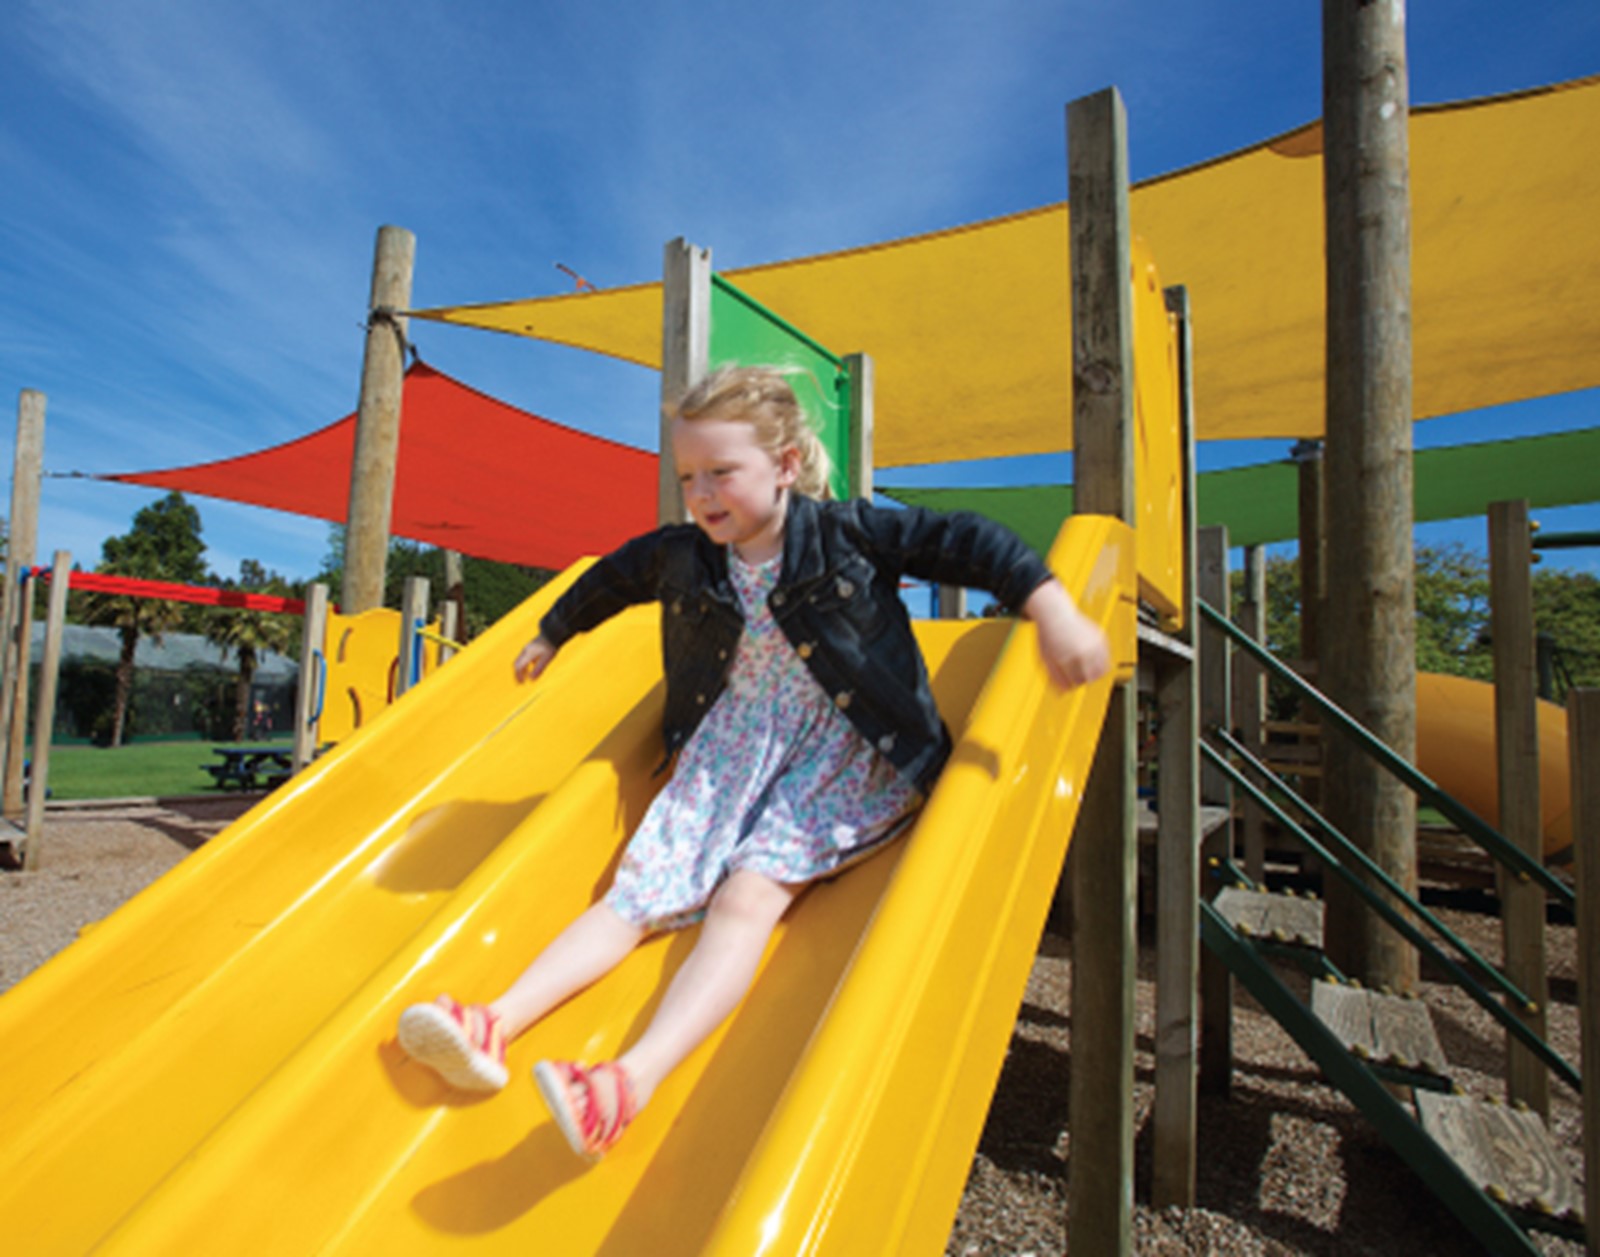 Child playing on slides